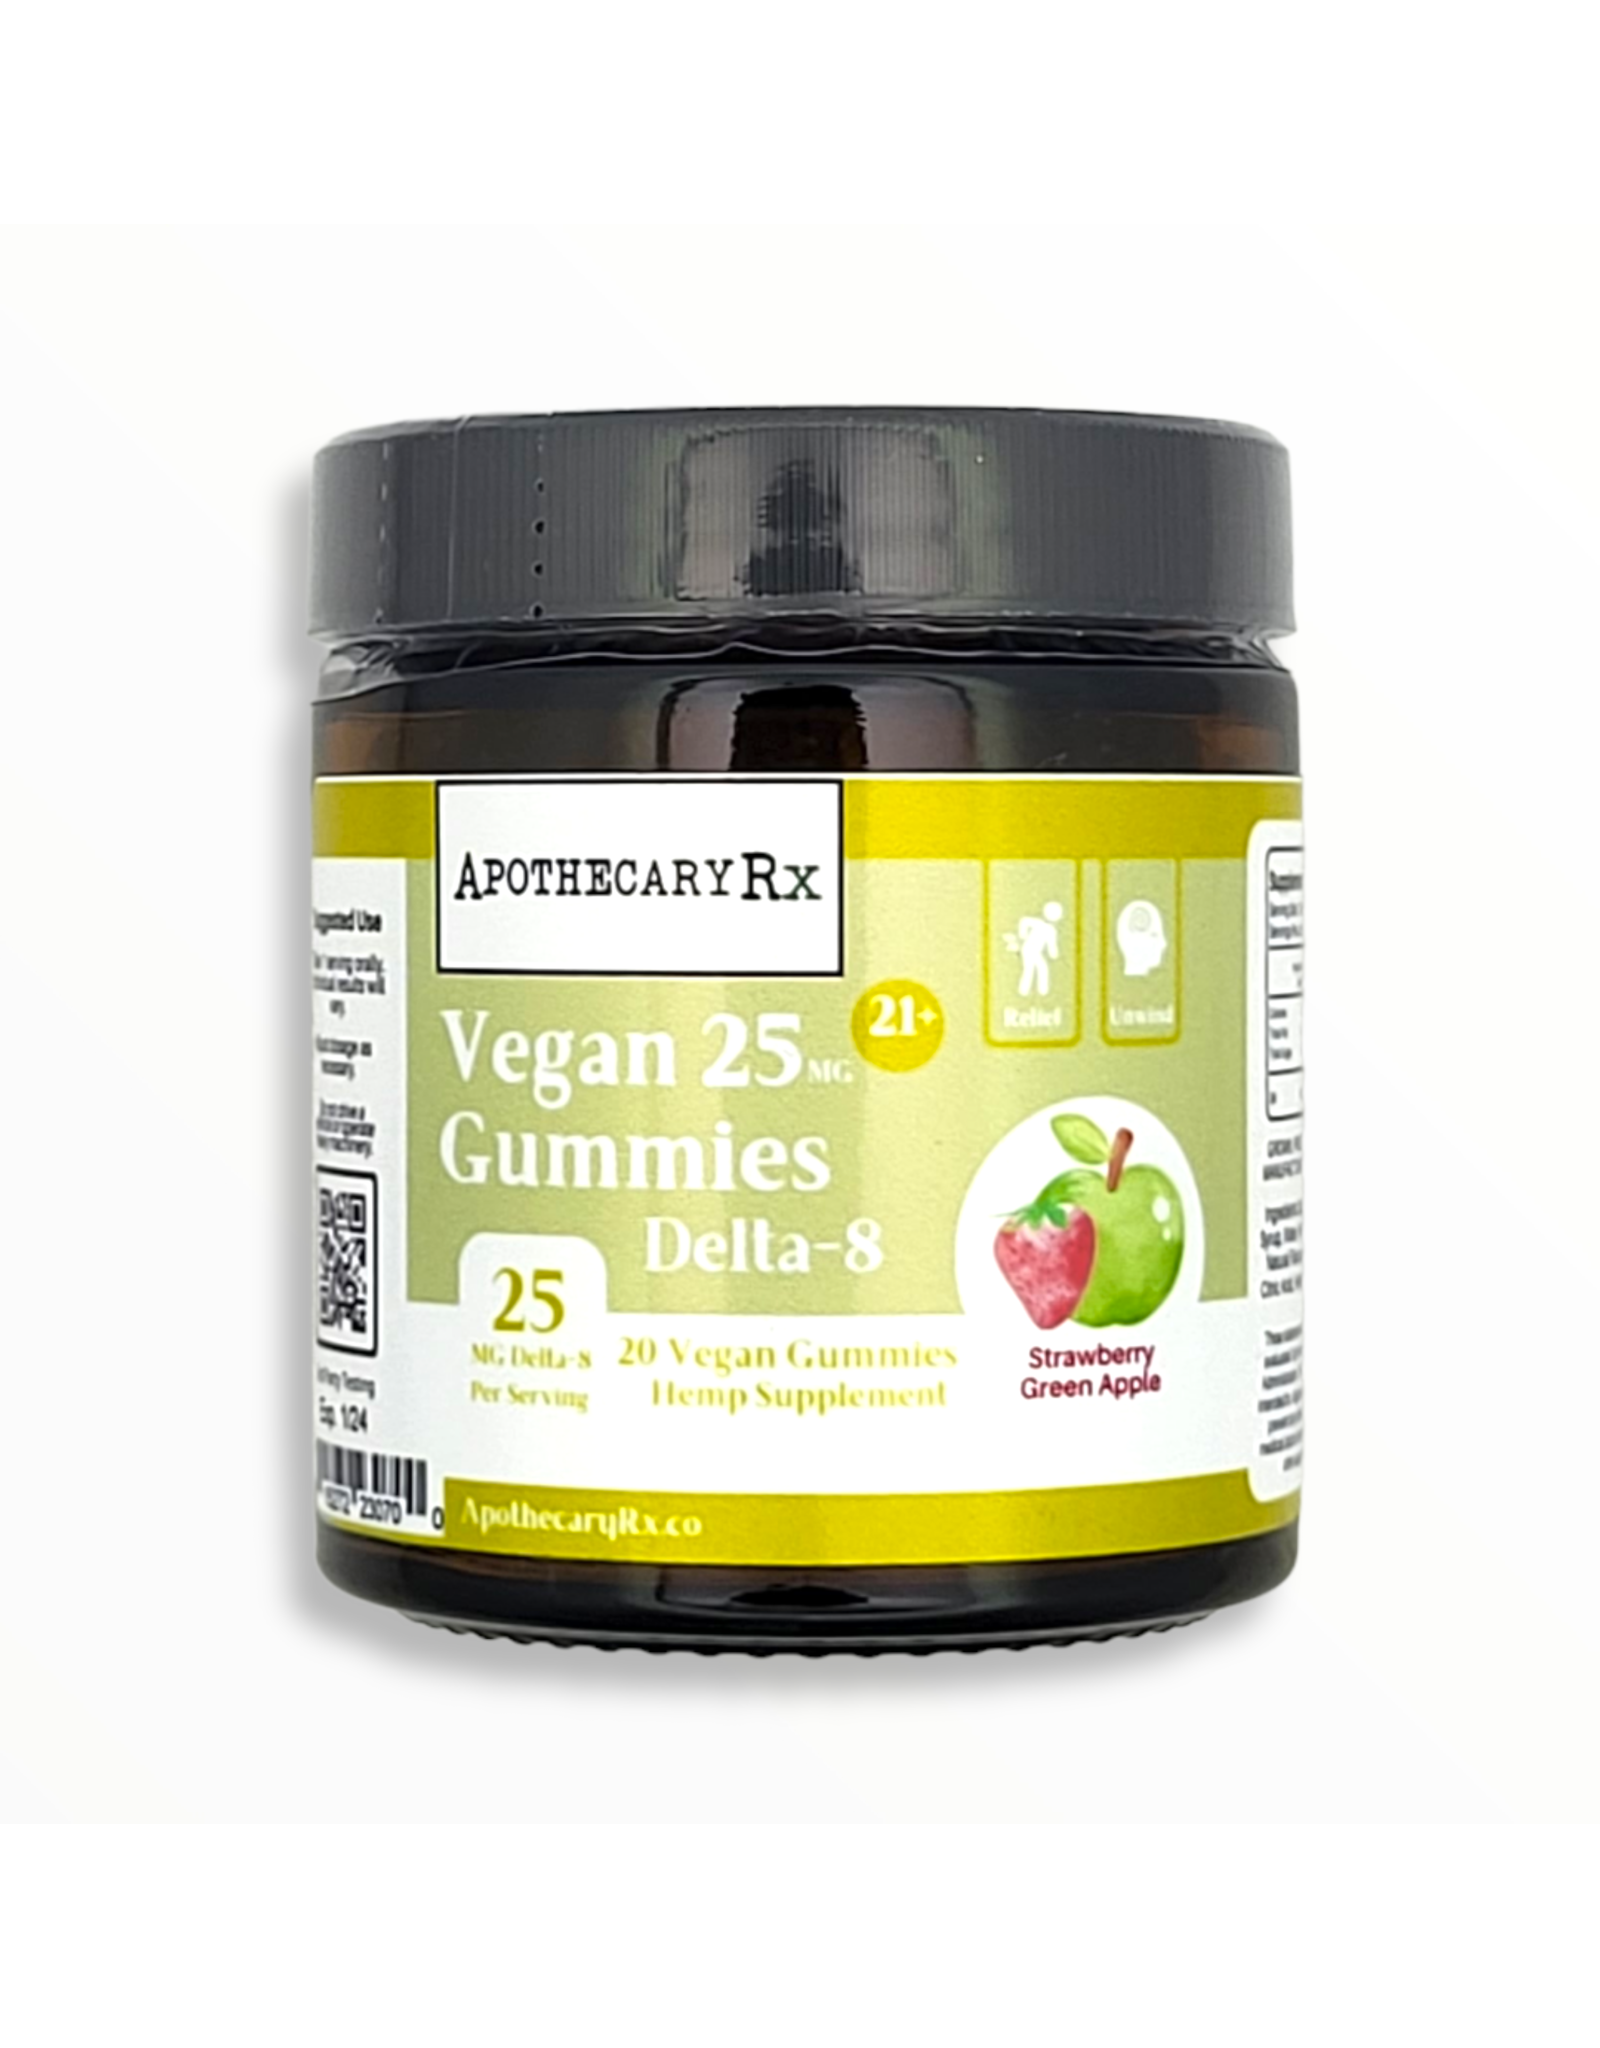 Apothecary Rx Apothecary Rx Delta 8 Vegan Non GMO Strawberry Green Apple Gummies 25mg 20ct